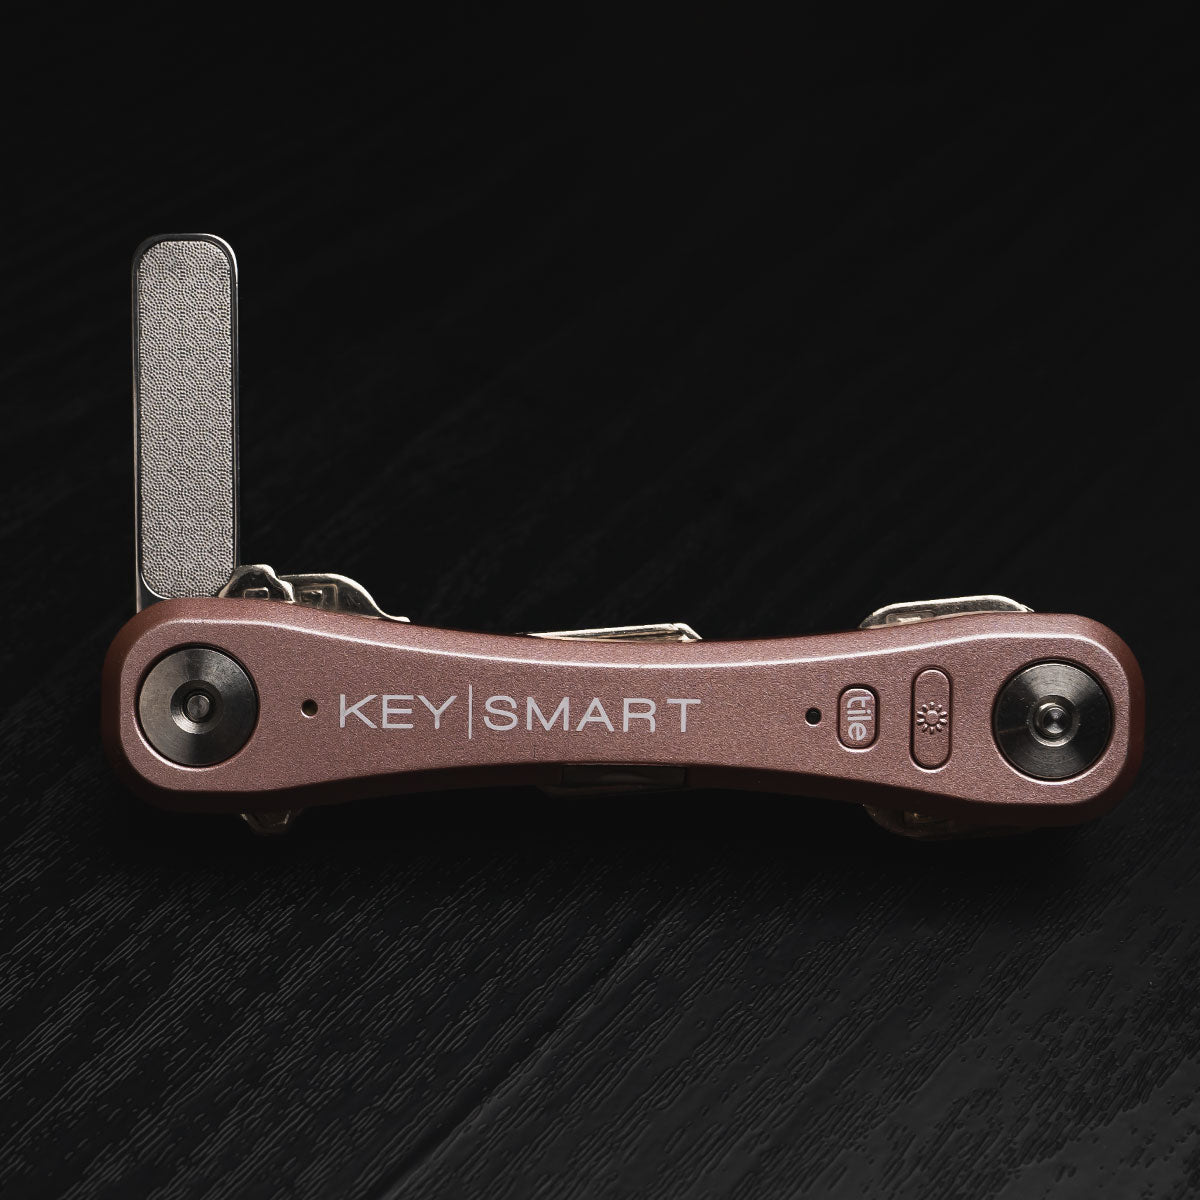 Accessories | KeySmart